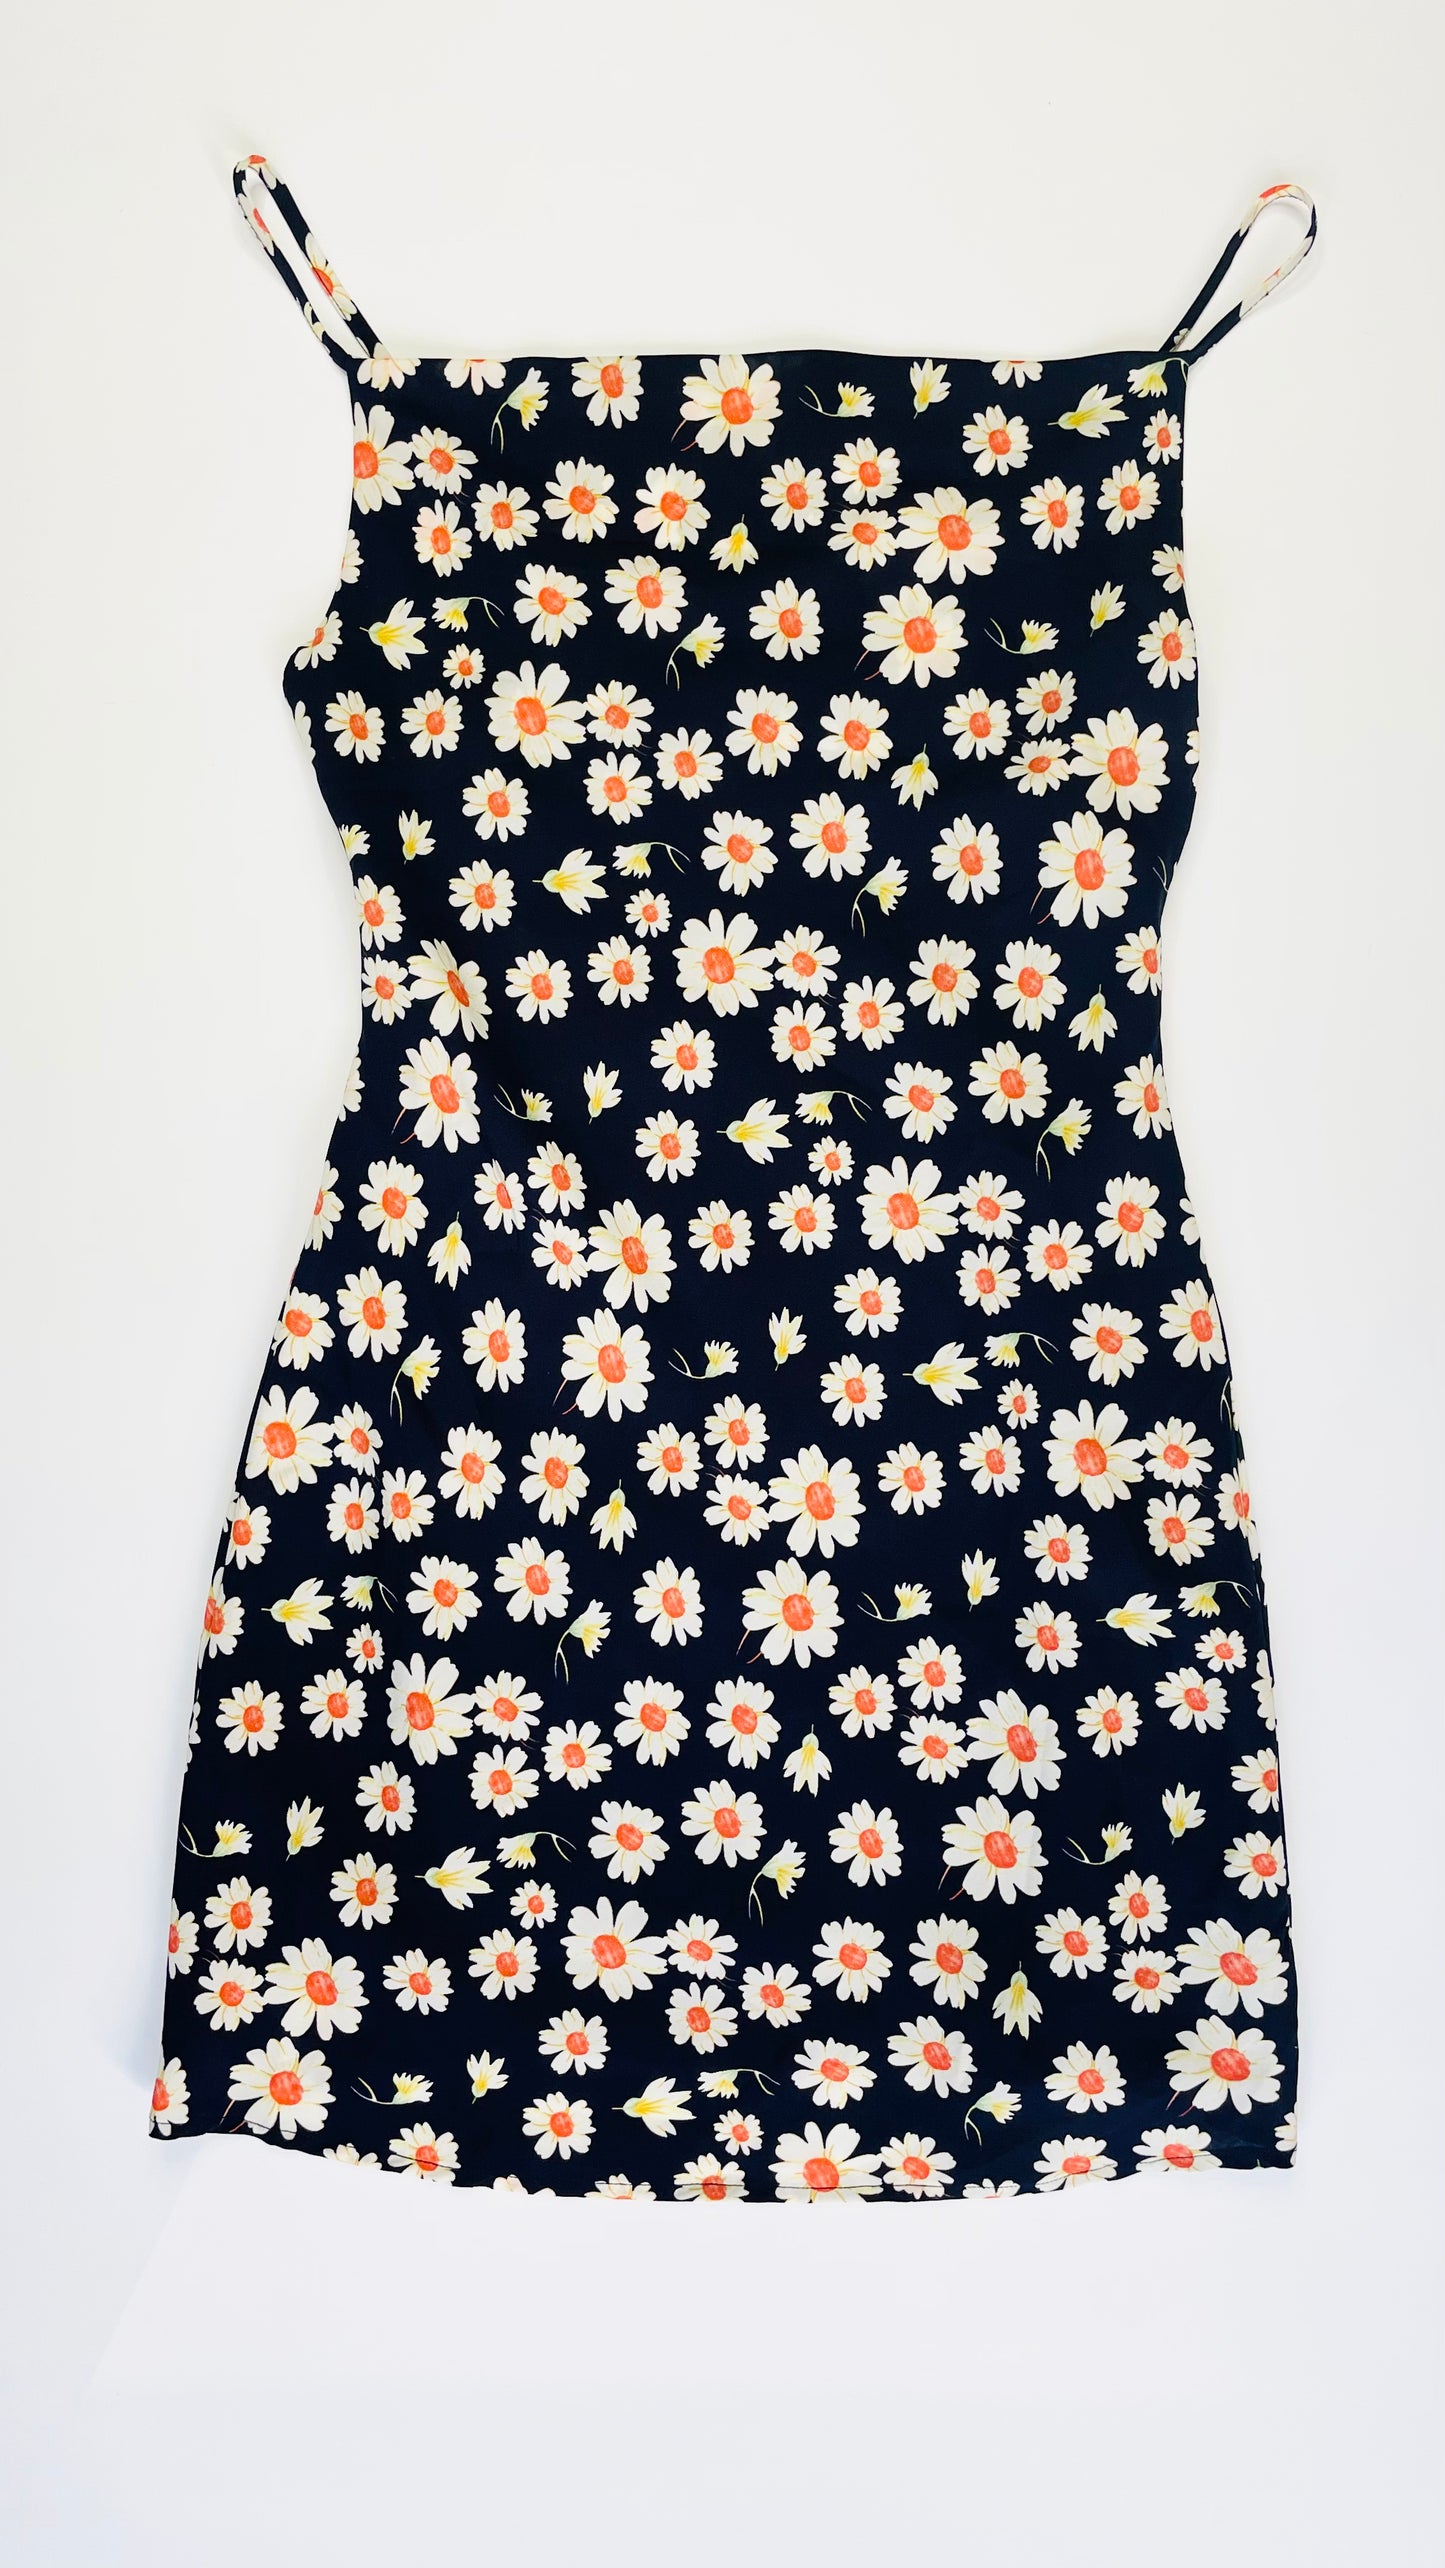 Pre-Loved navy floral daisy print dress - Size M